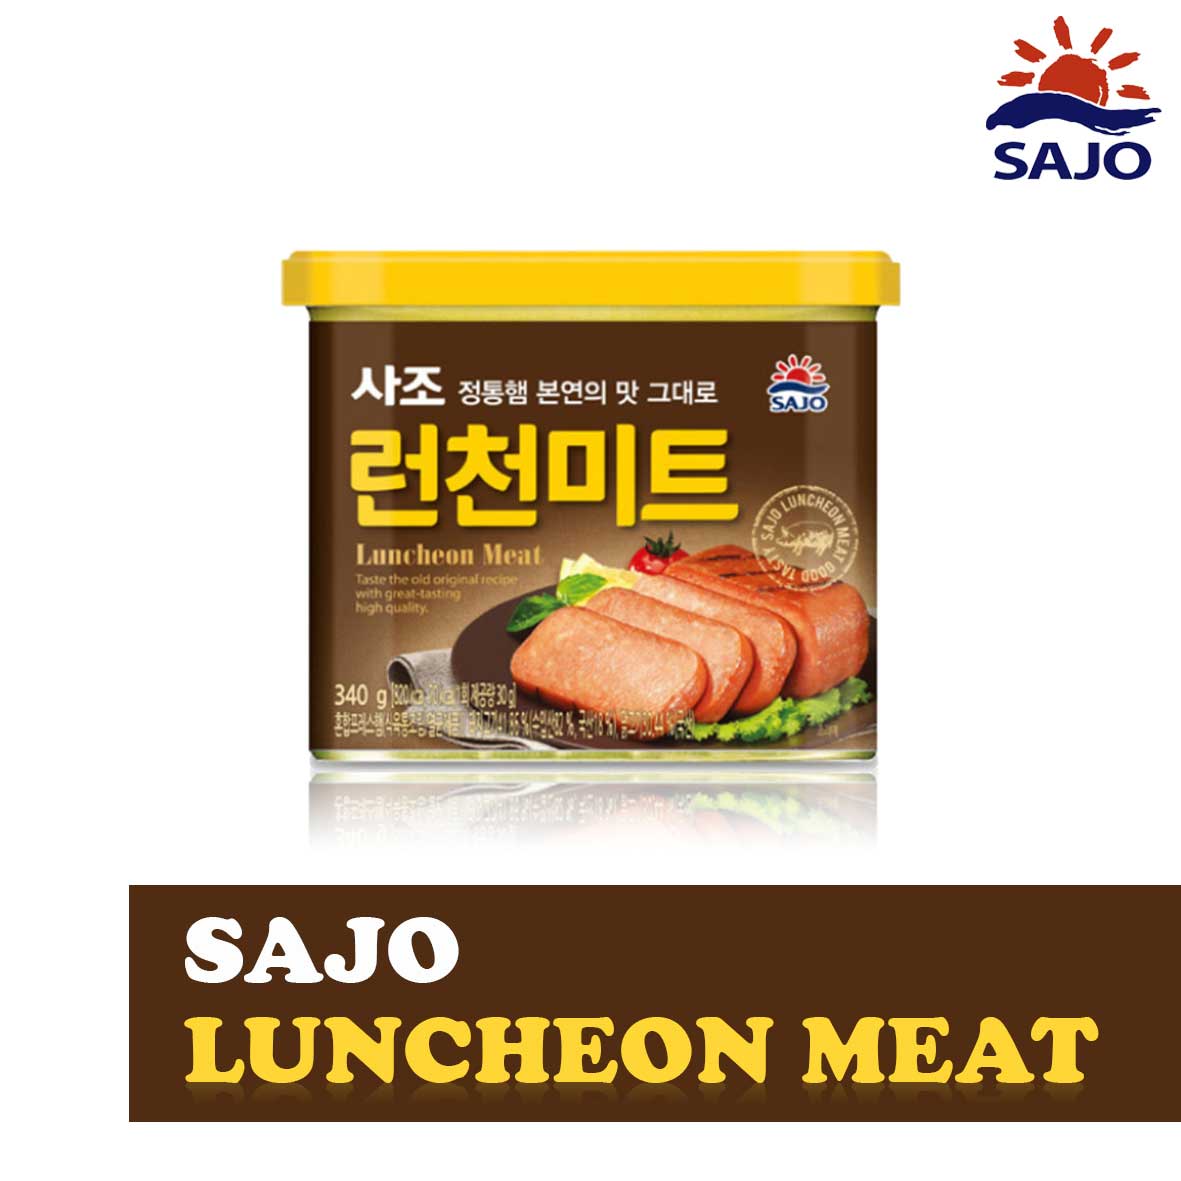 sajo-luncheon-meat-main